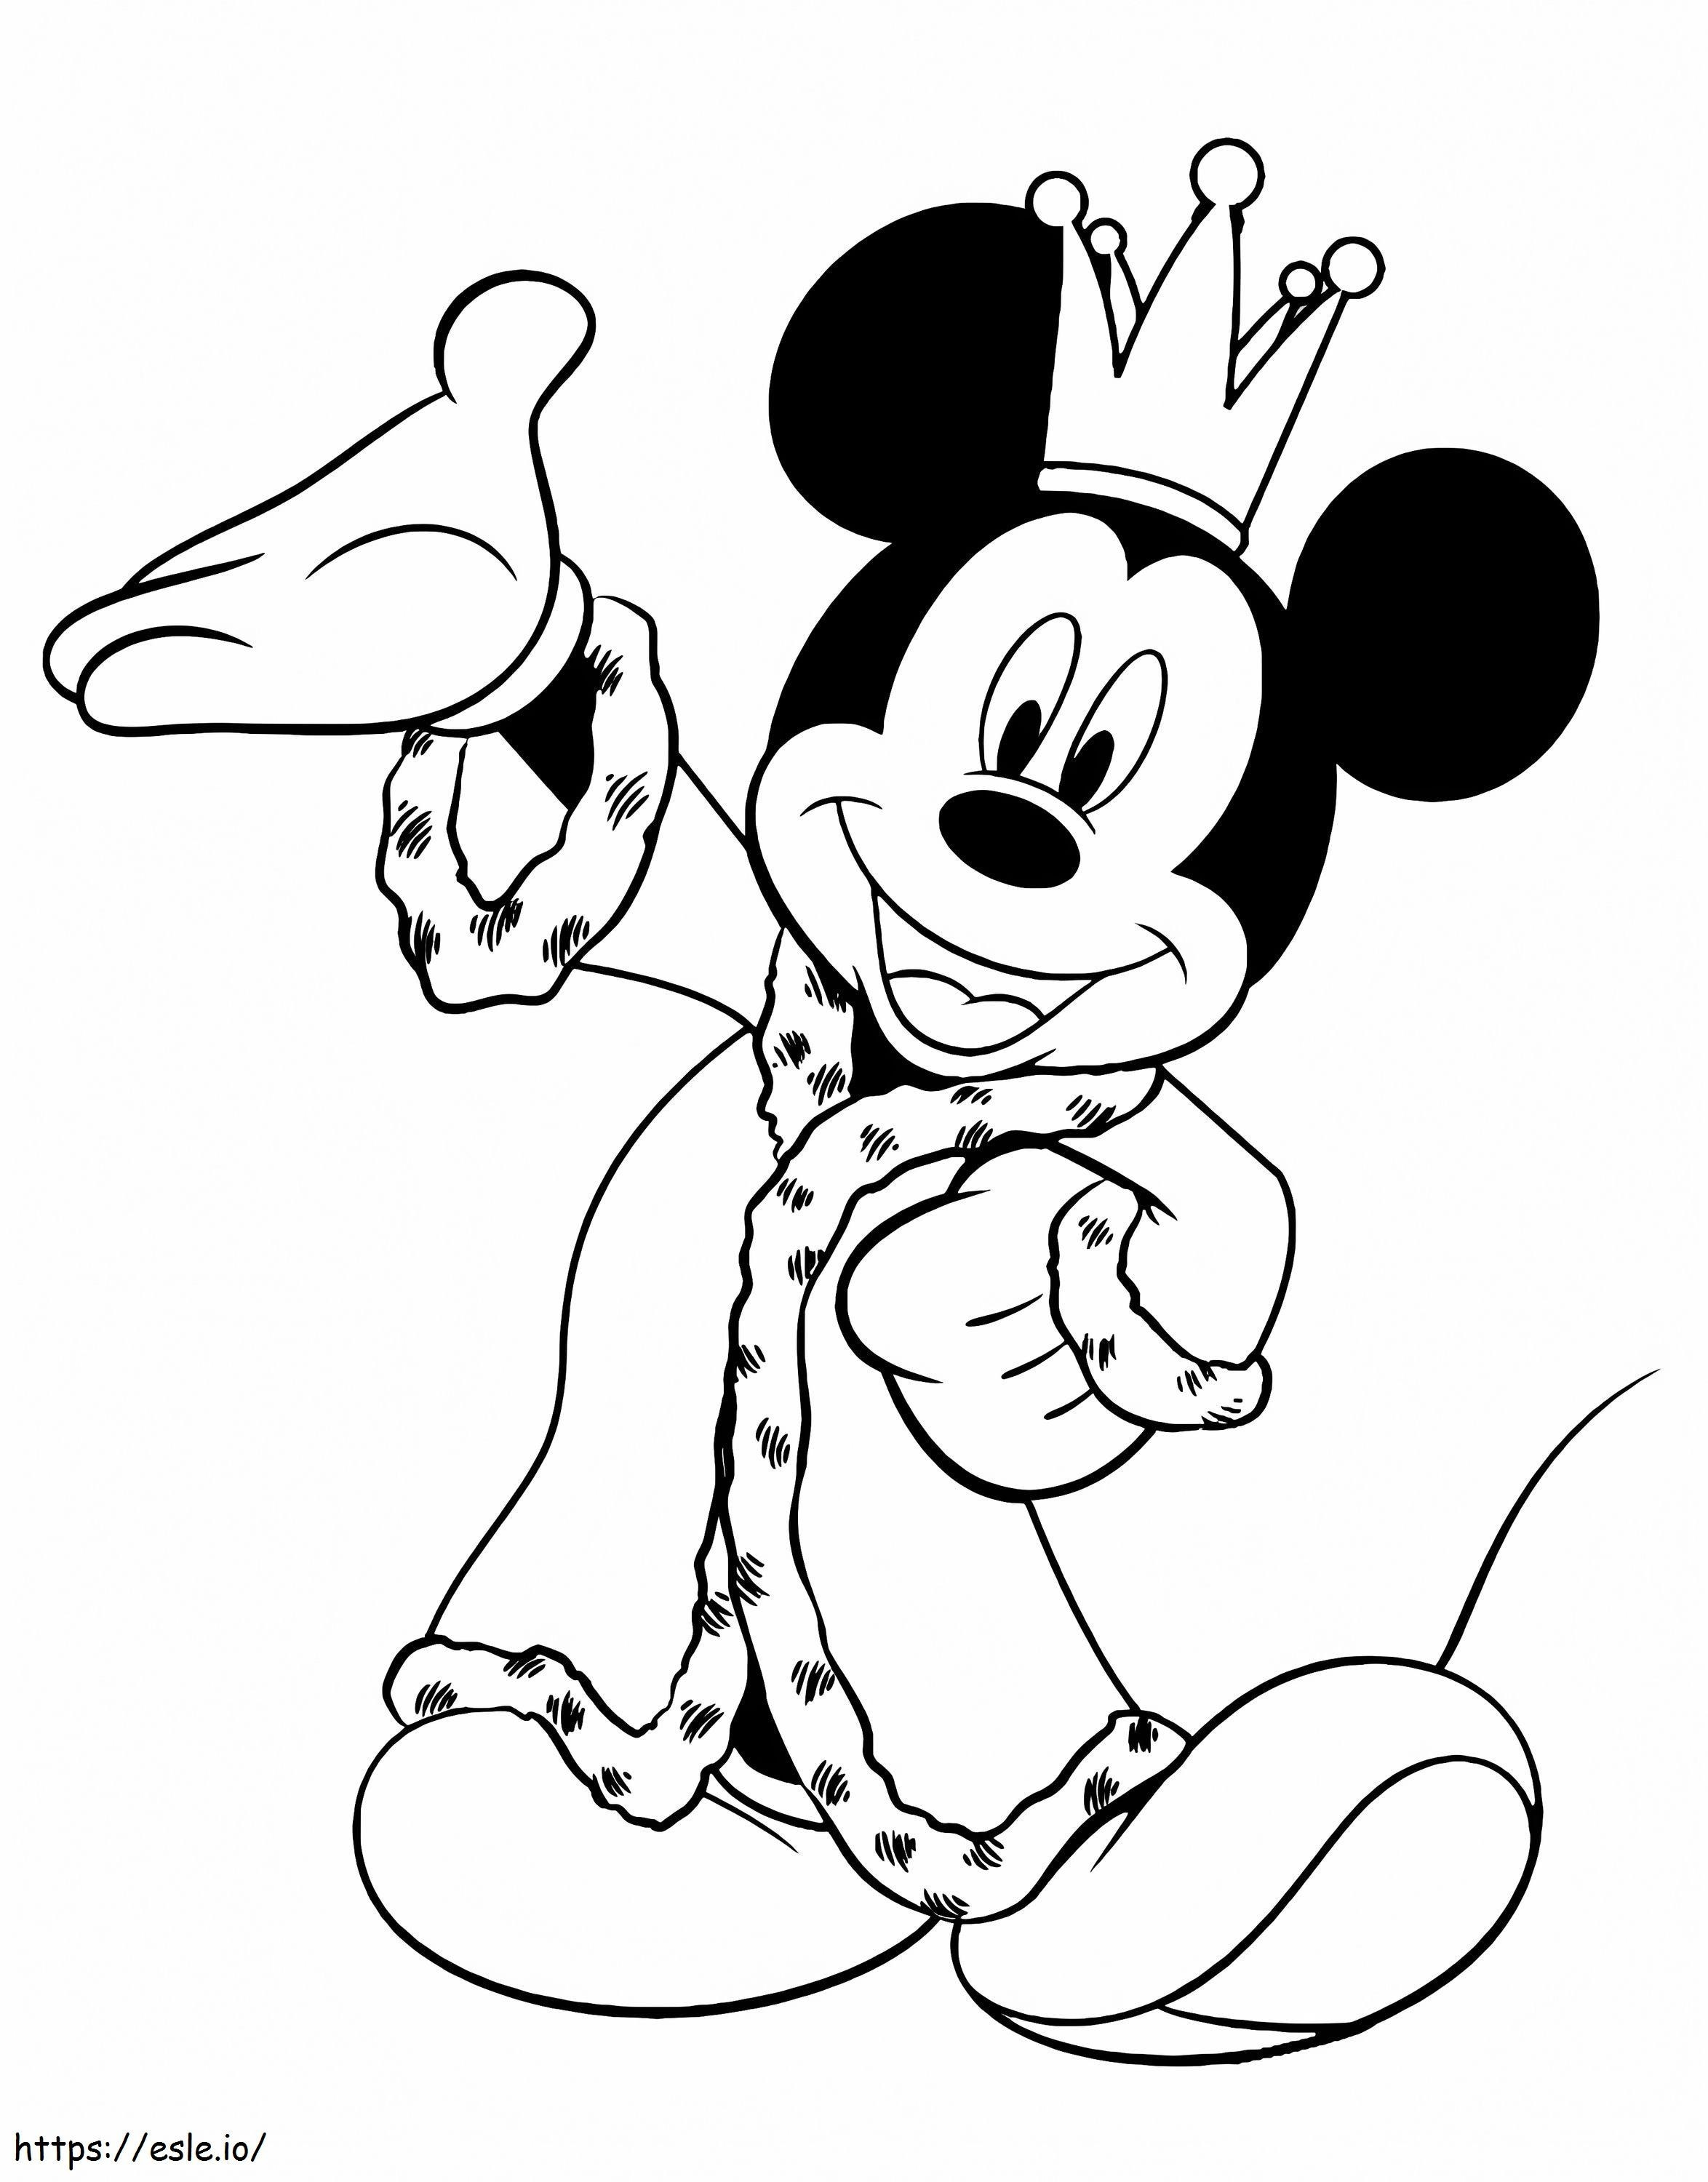 Coloriage Roi Mickey Mouse à imprimer dessin